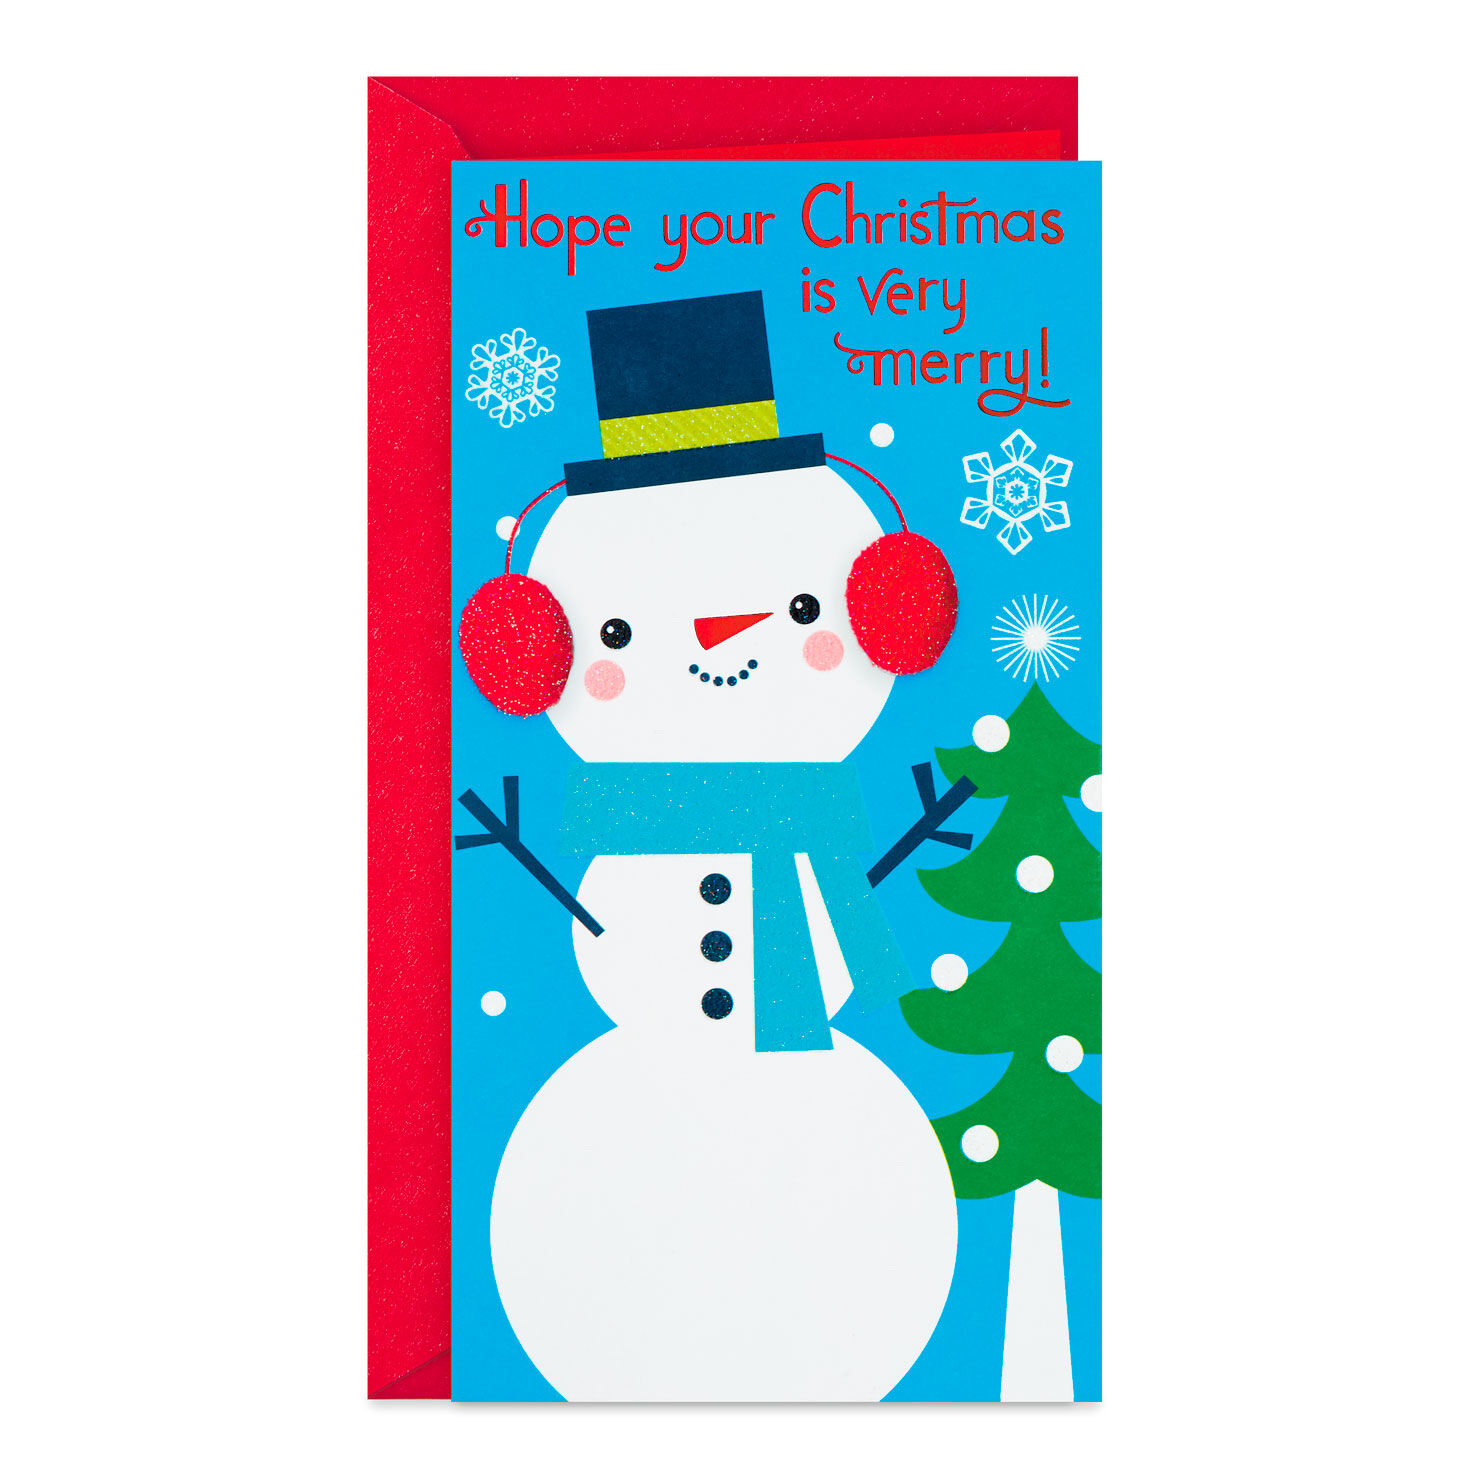 Very Merry Snowman Money Holder Christmas Card for only USD 2.00 | Hallmark